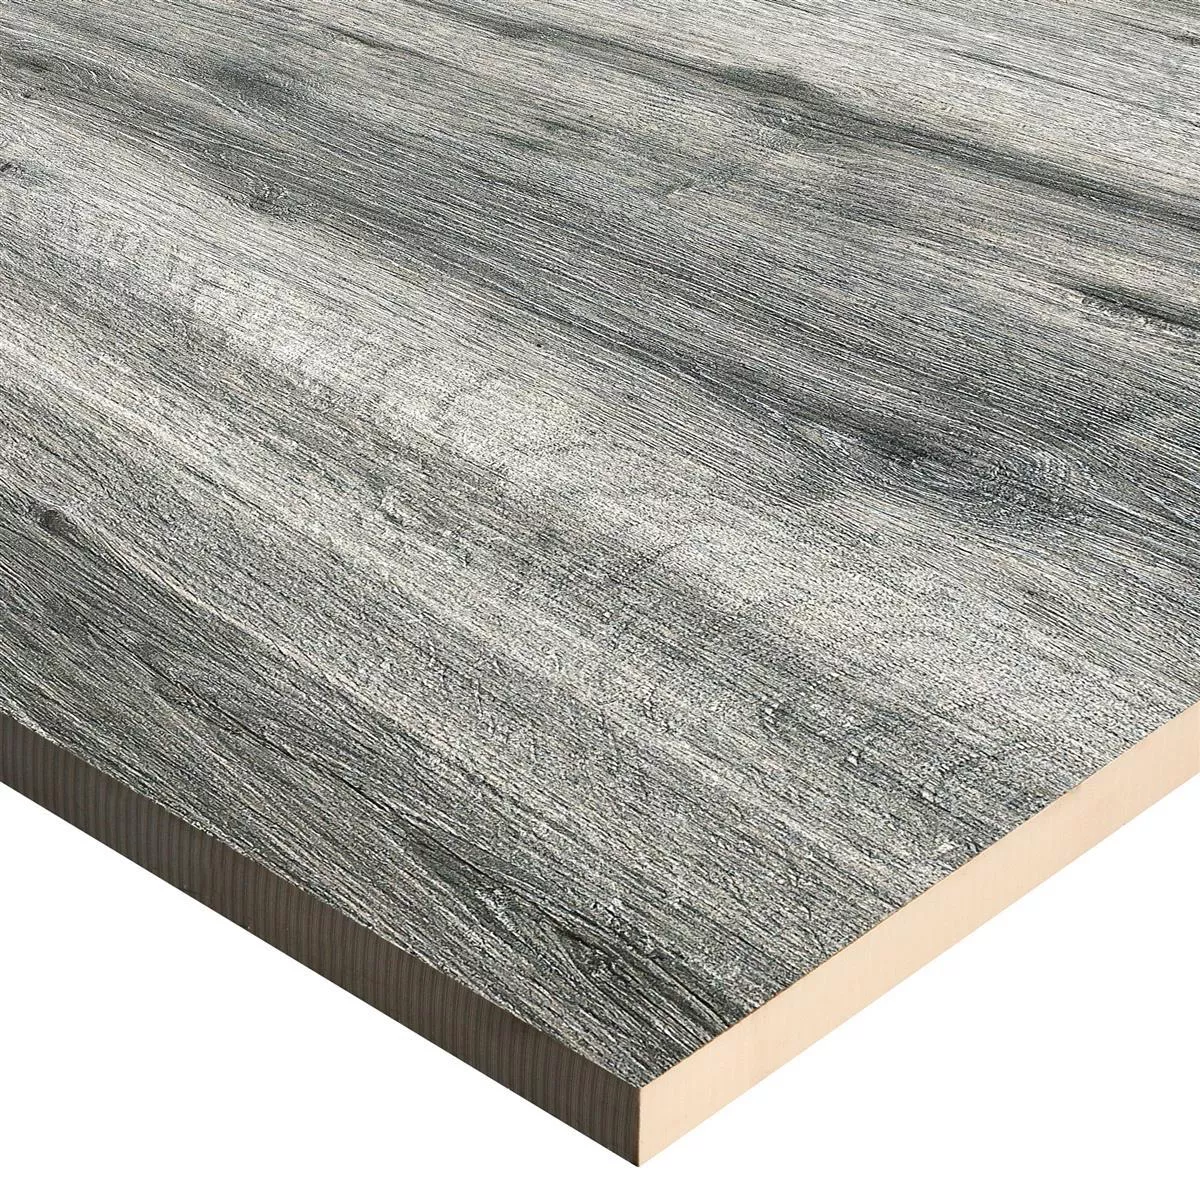 Sample Terrace Tiles Starwood Wood Optic Grey 60x60cm